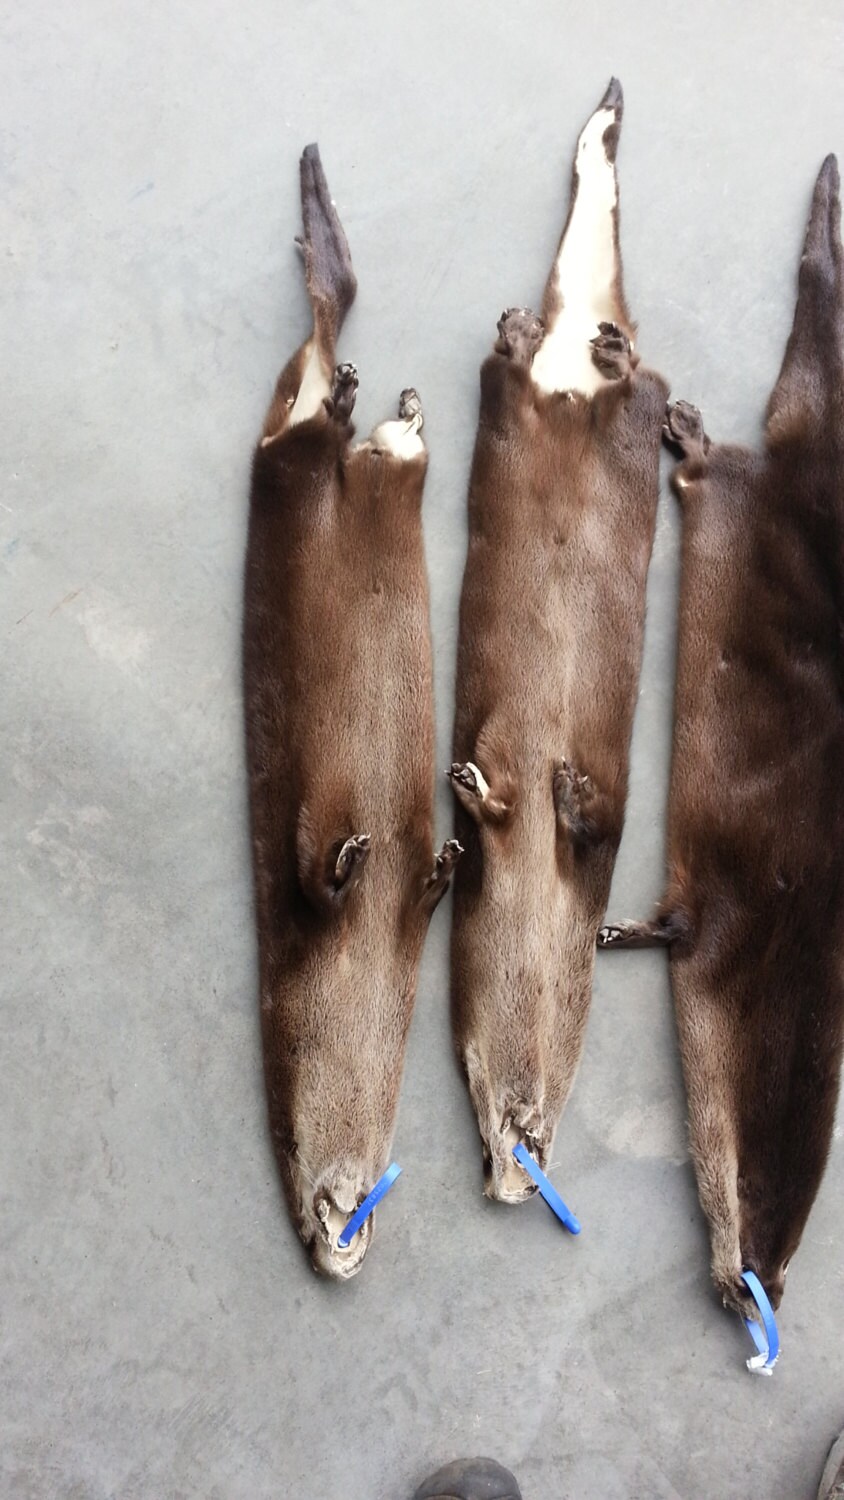 art craft animal hide,tanned fur good leather. River Otter pelt decoration 